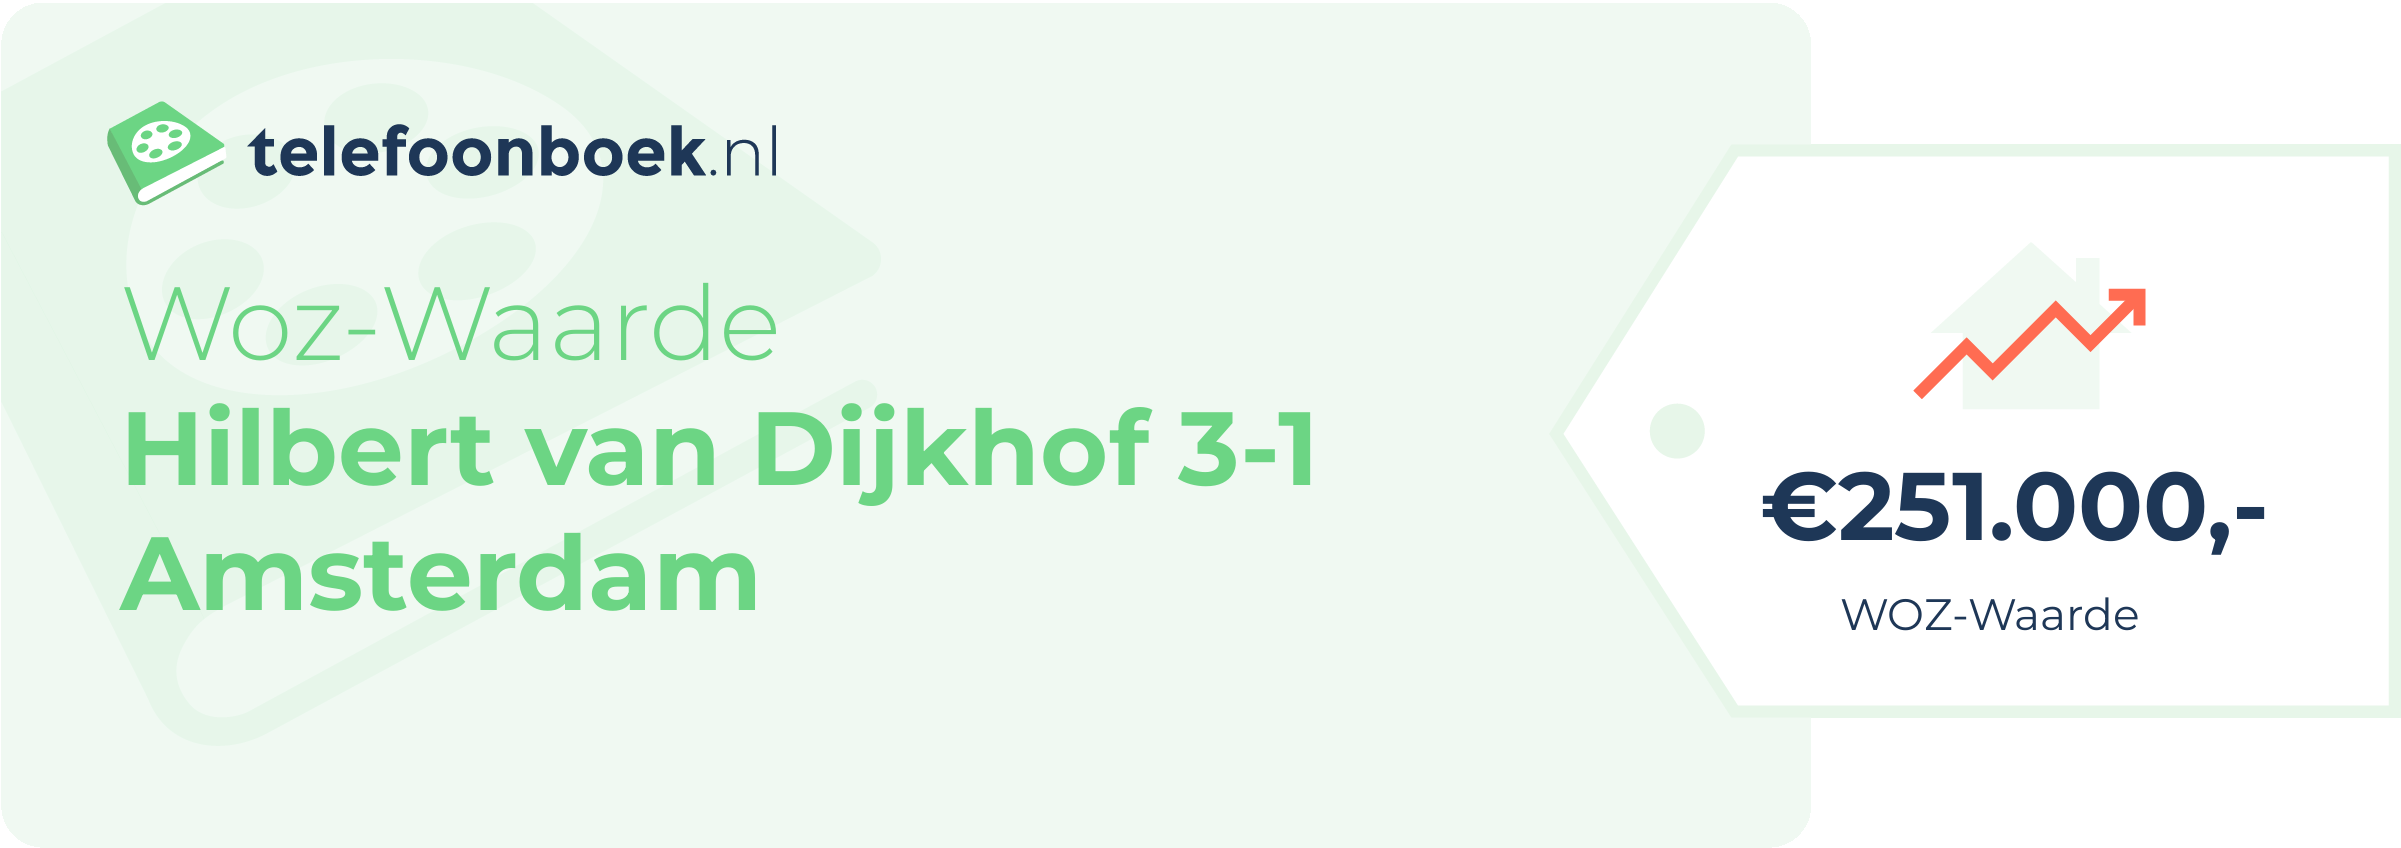 WOZ-waarde Hilbert Van Dijkhof 3-1 Amsterdam